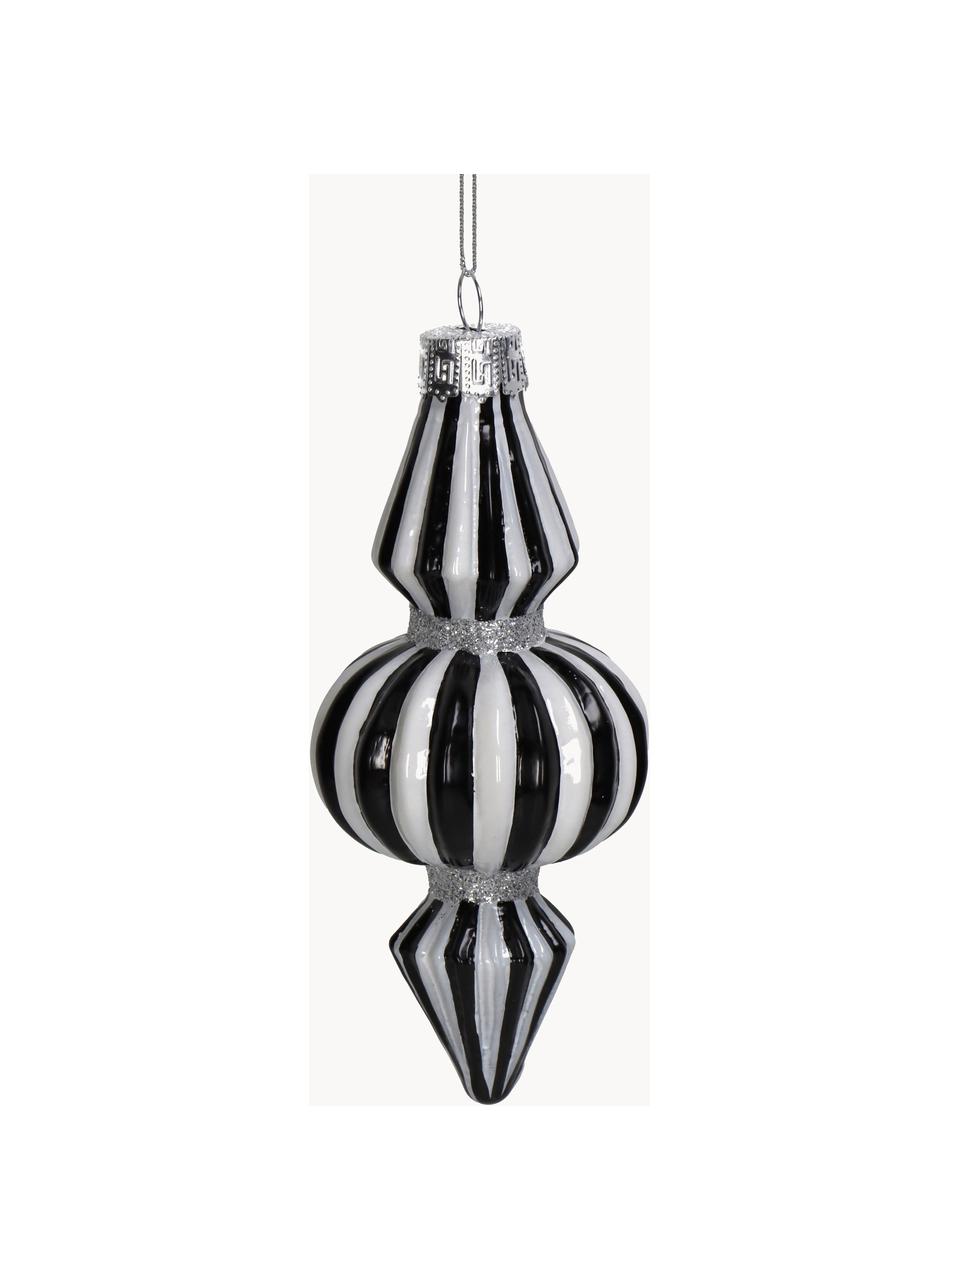 Adorno navideño con forma orgánica Stripe, Vidrio, Negro, blanco, Ø 7 x Al 15 cm